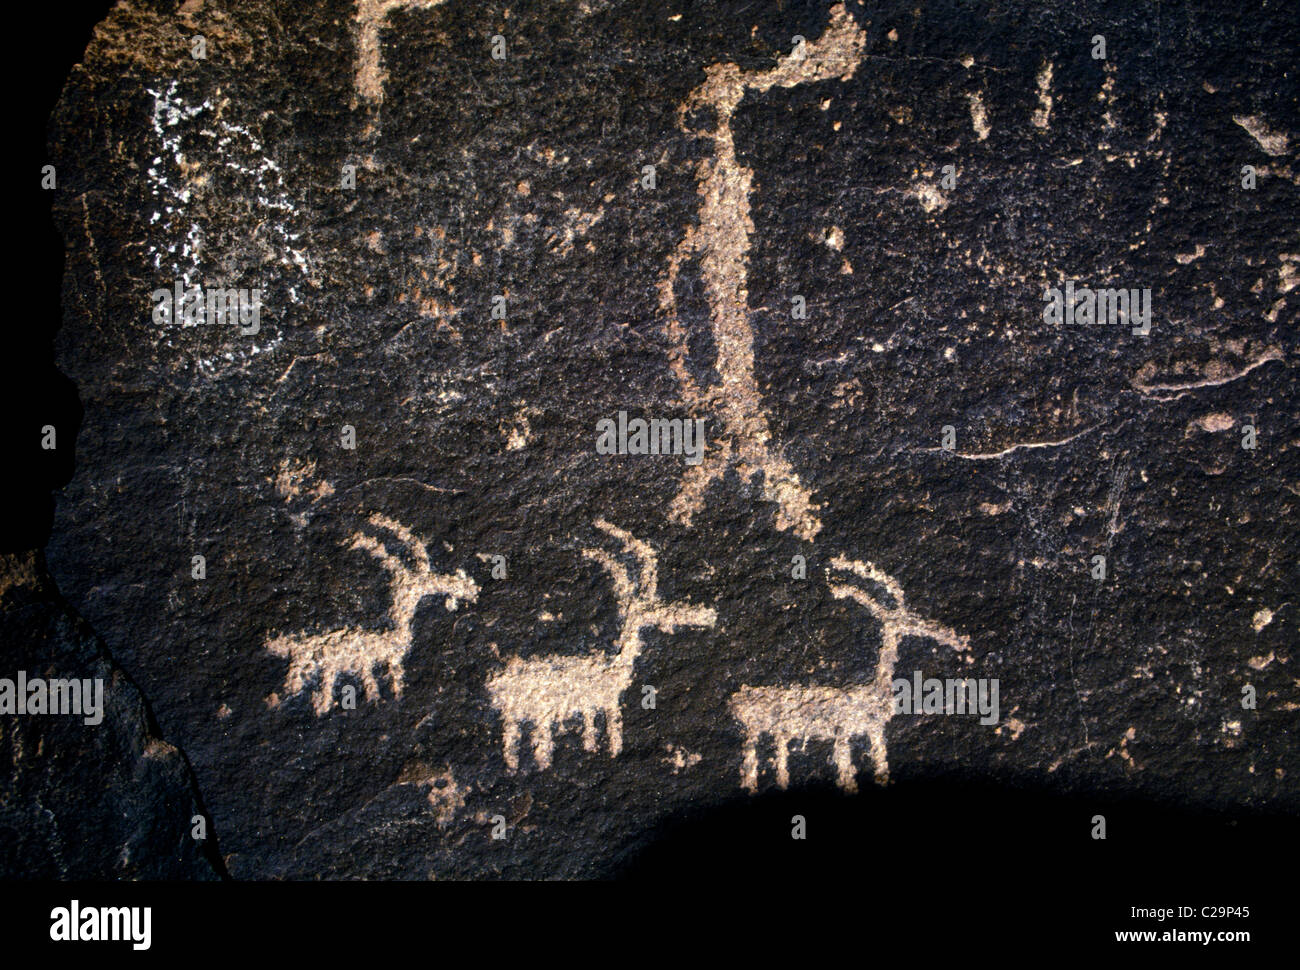 petroglyph, petroglyphs, rock art, prehistoric art, Anasazi culture, Puerco Pueblo Ruins, Puerco Pueblo, Petrified Forest National Park, Arizona Stock Photo